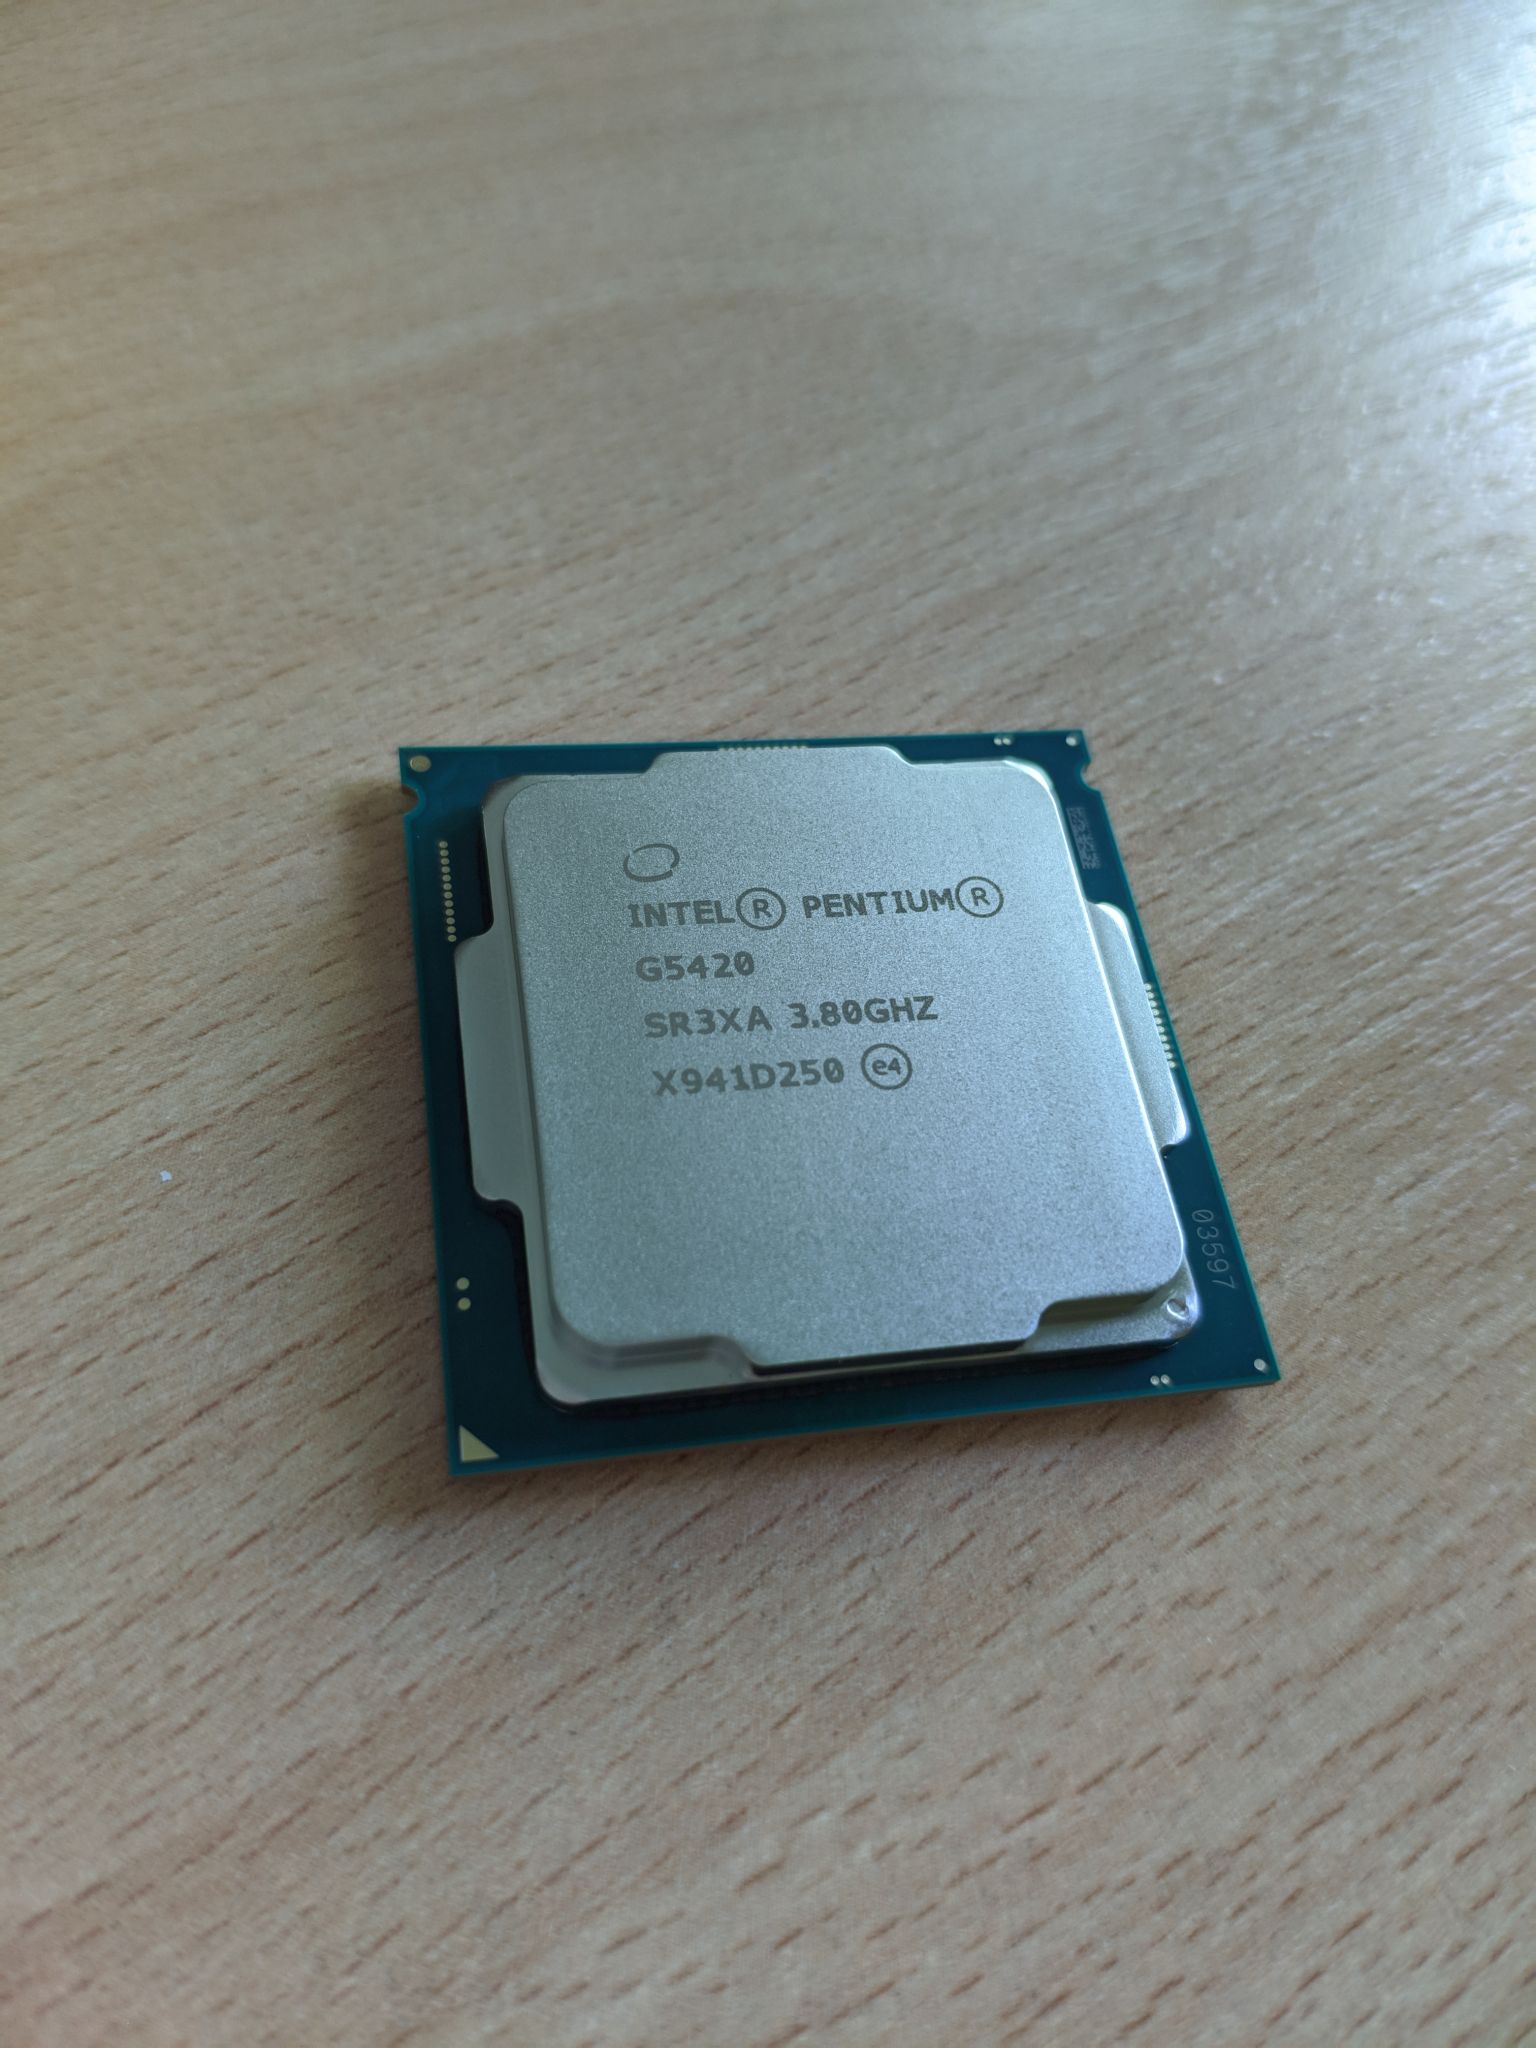 Intel gold g5420